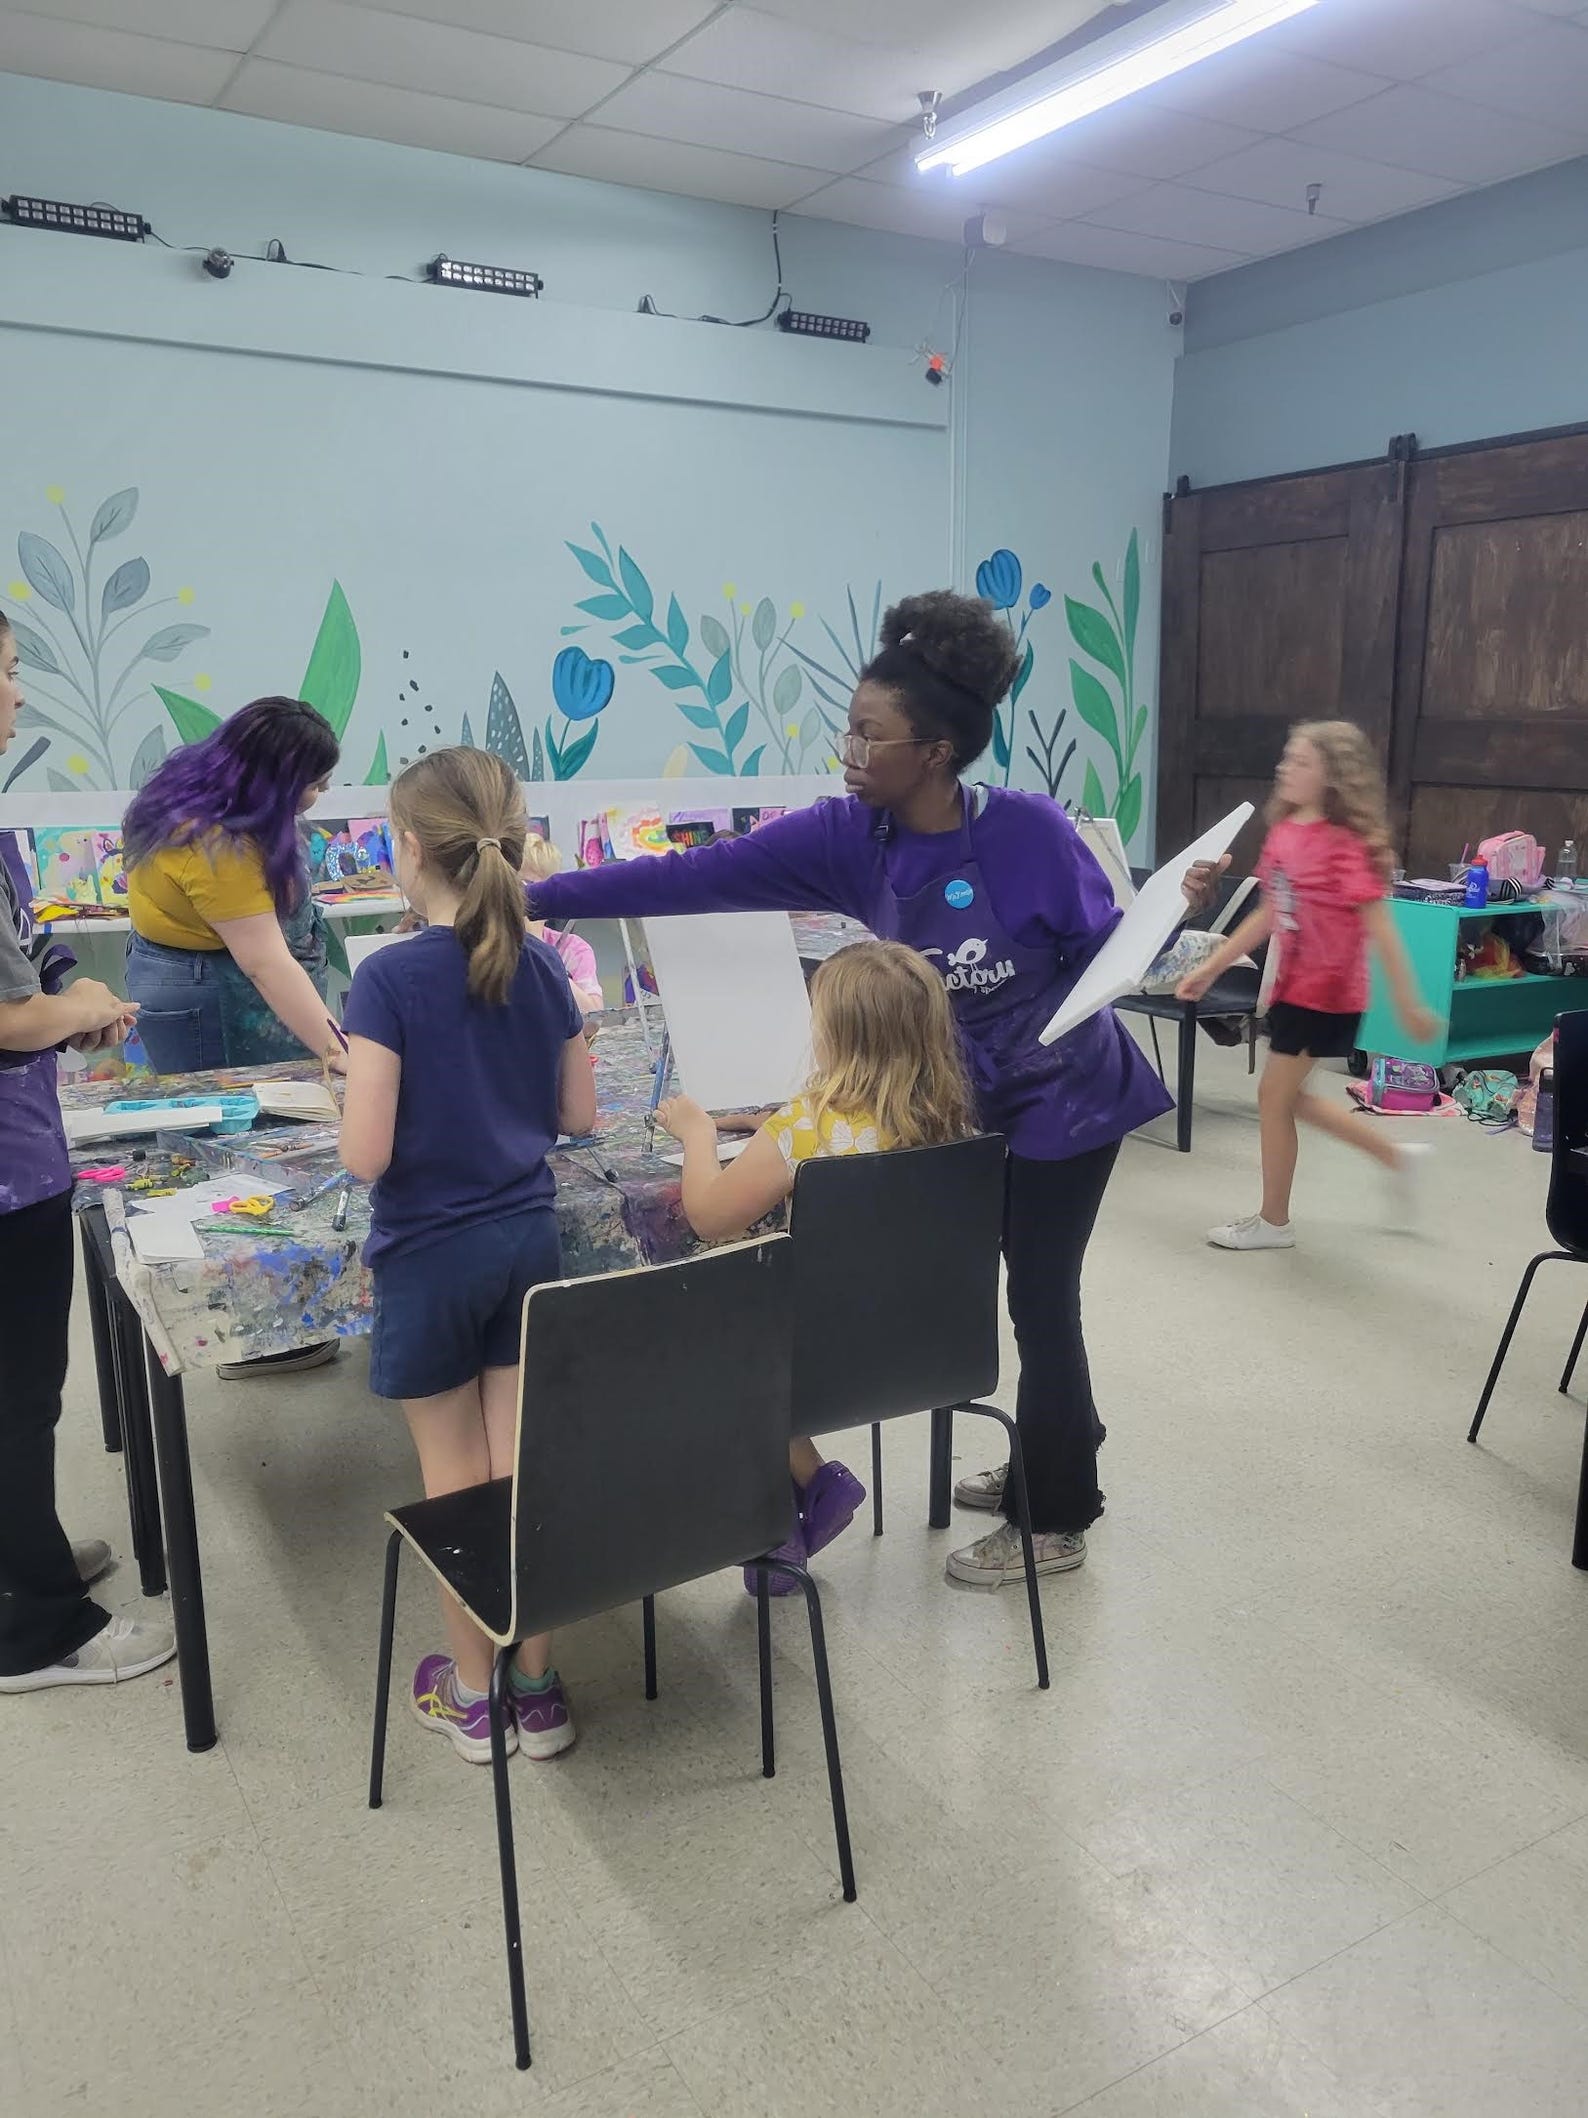 McKenzie Ewing, 17, helps kids at the Art Factory's summer camp